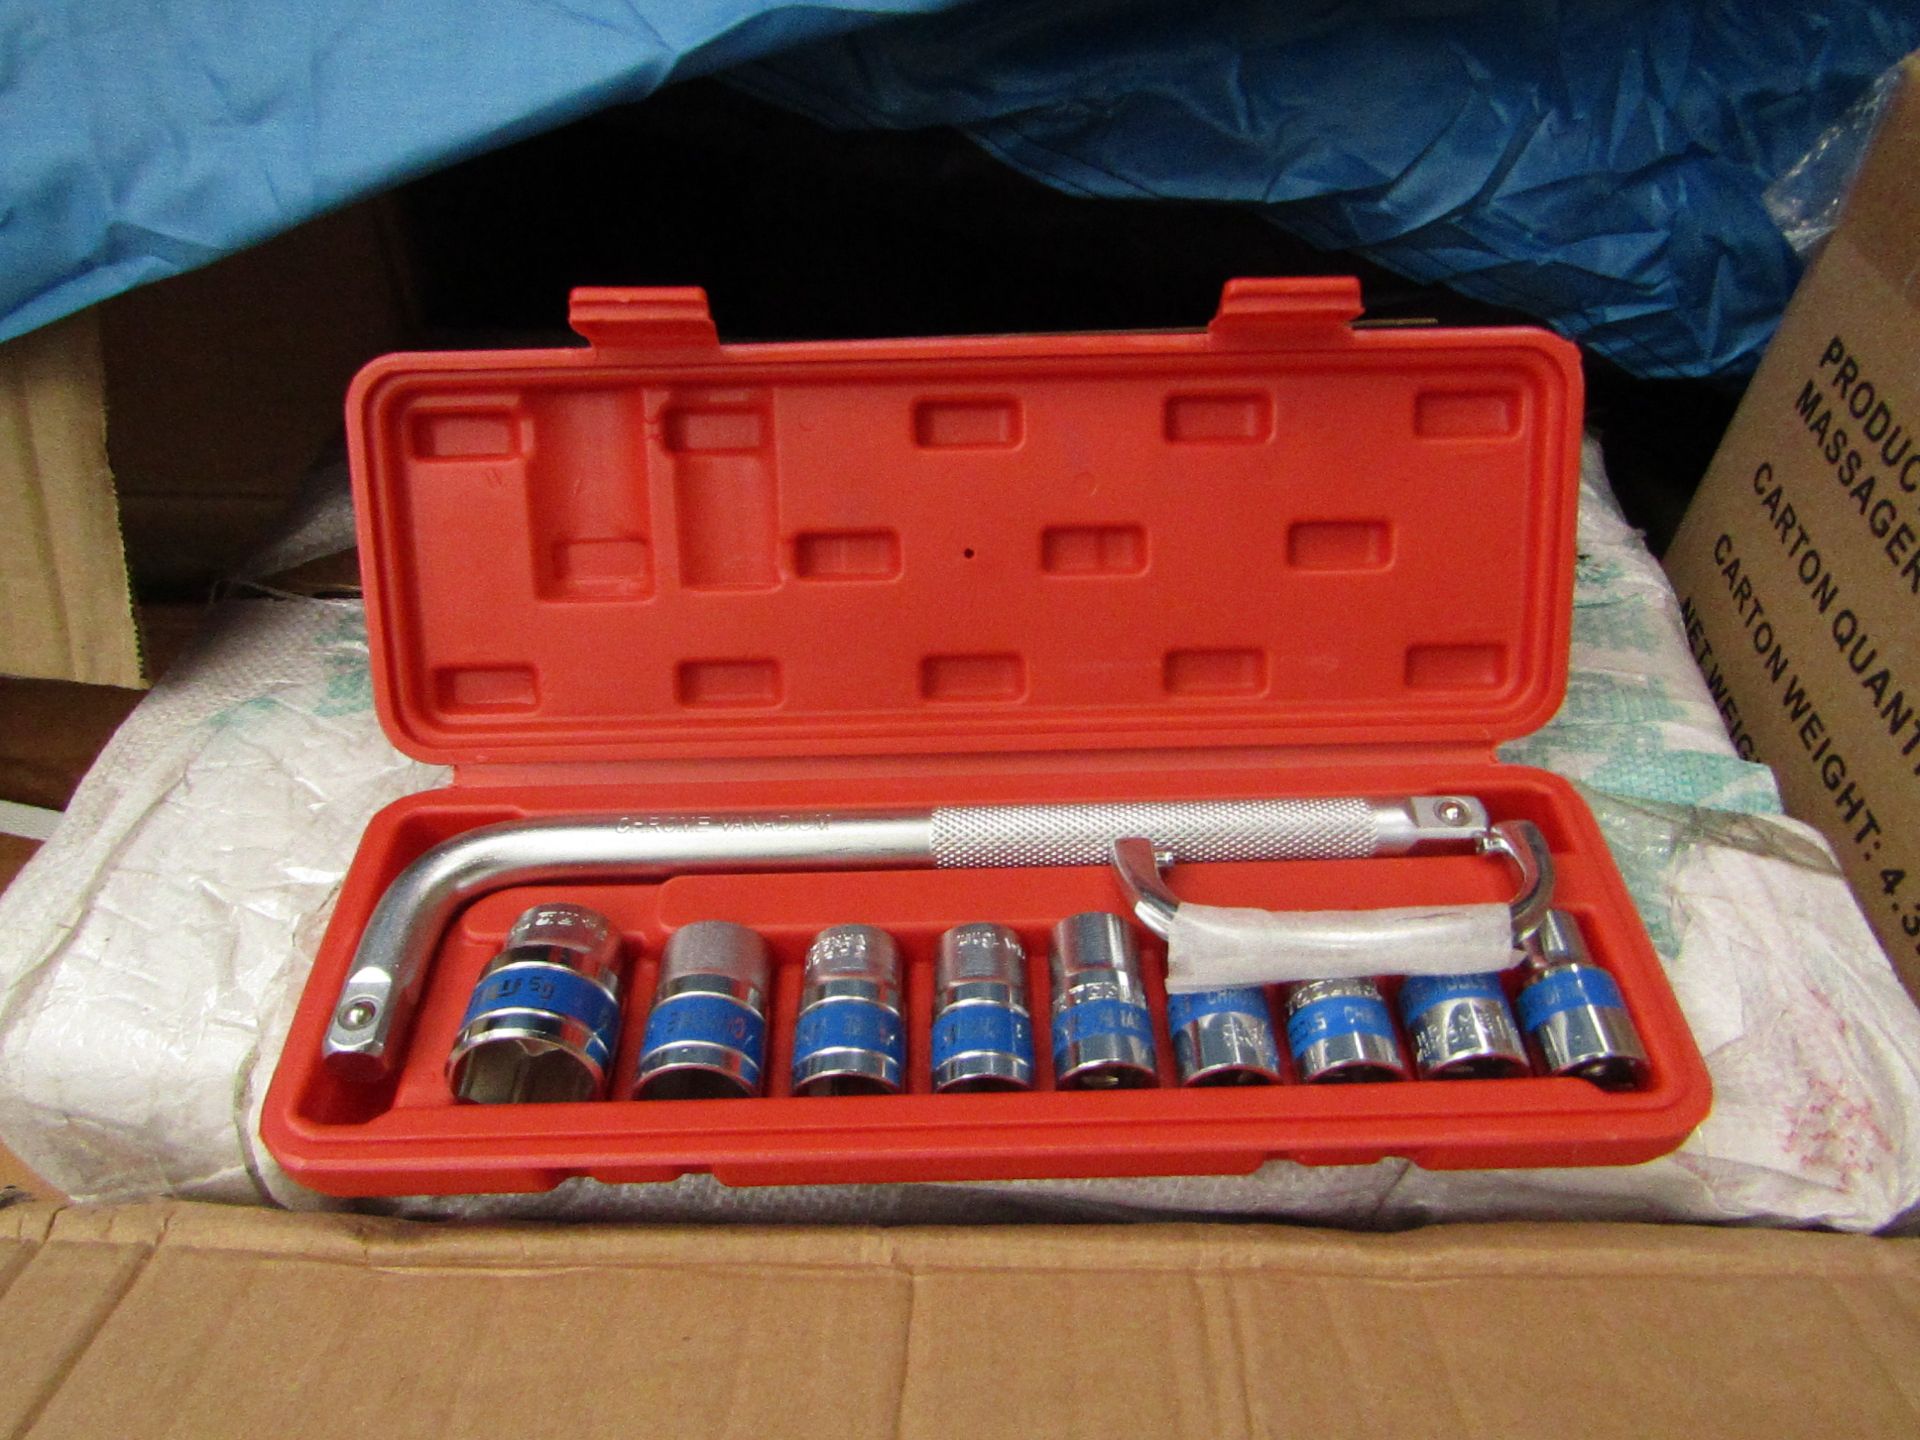 Mig Tools 10 piece chrome vanadium socket set in carry case, new